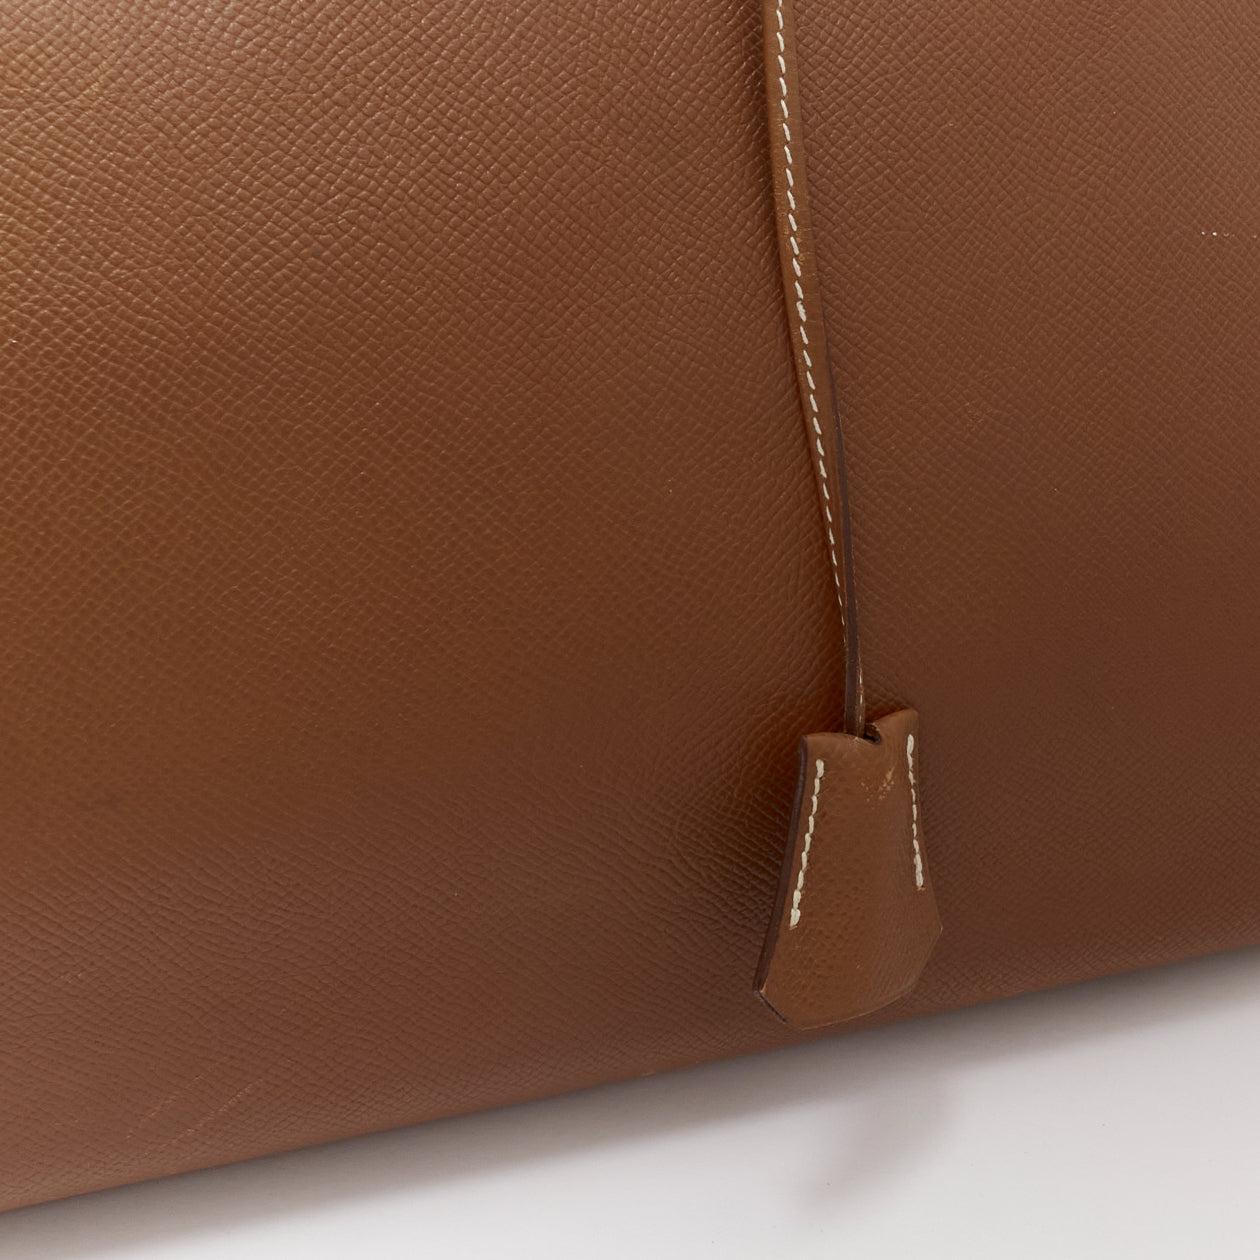 HERMES Birkin 40 Epsom brown leather gold hardware leather tote bag For Sale 3